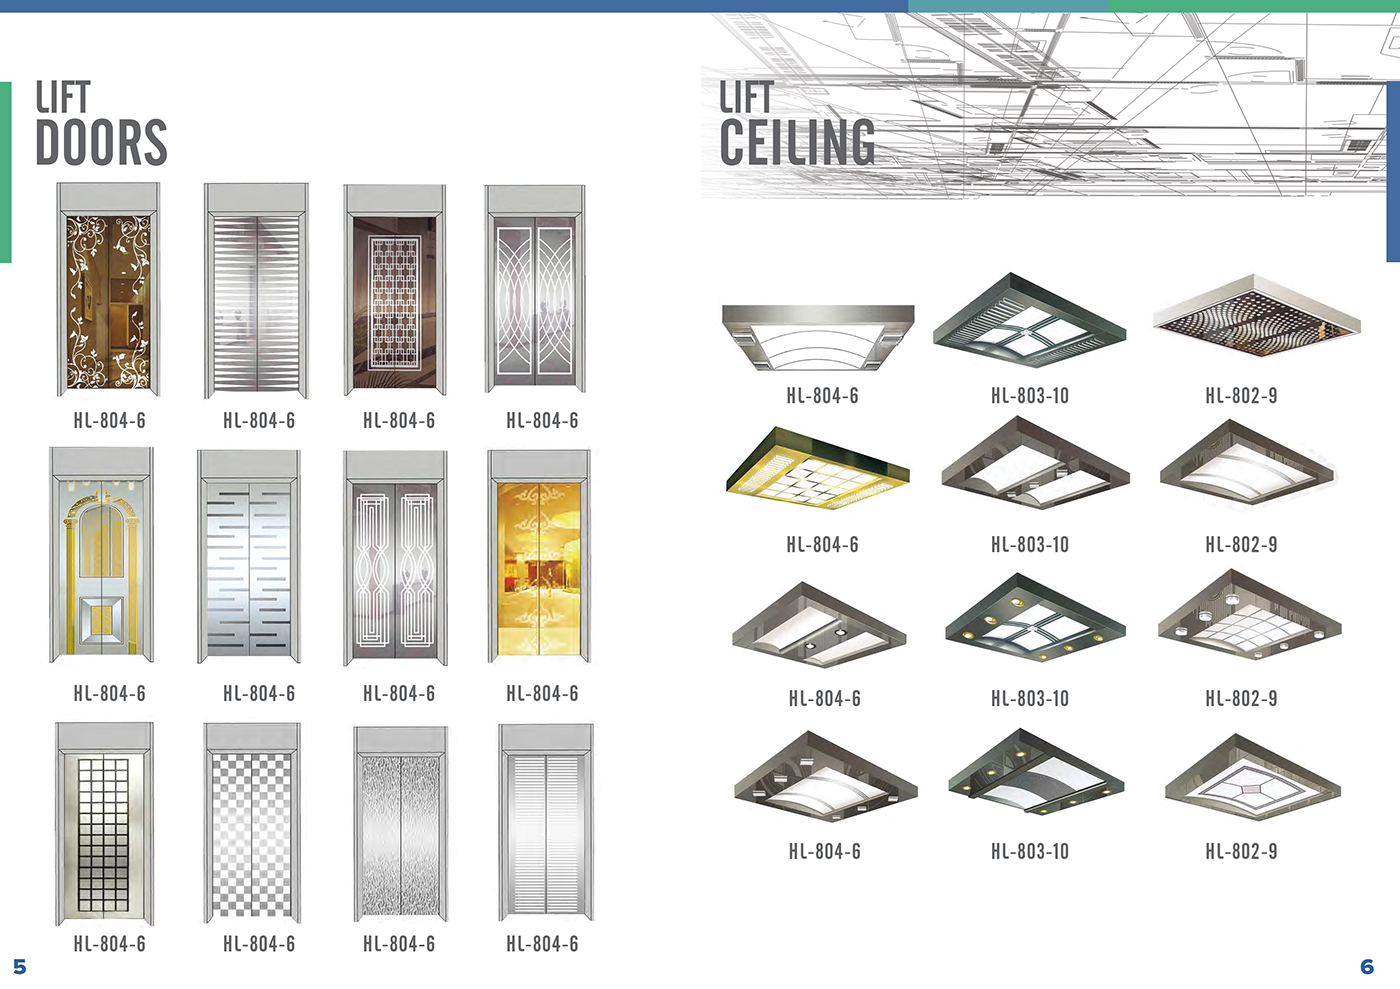 Catalogue lifts world machine Elevators Solution